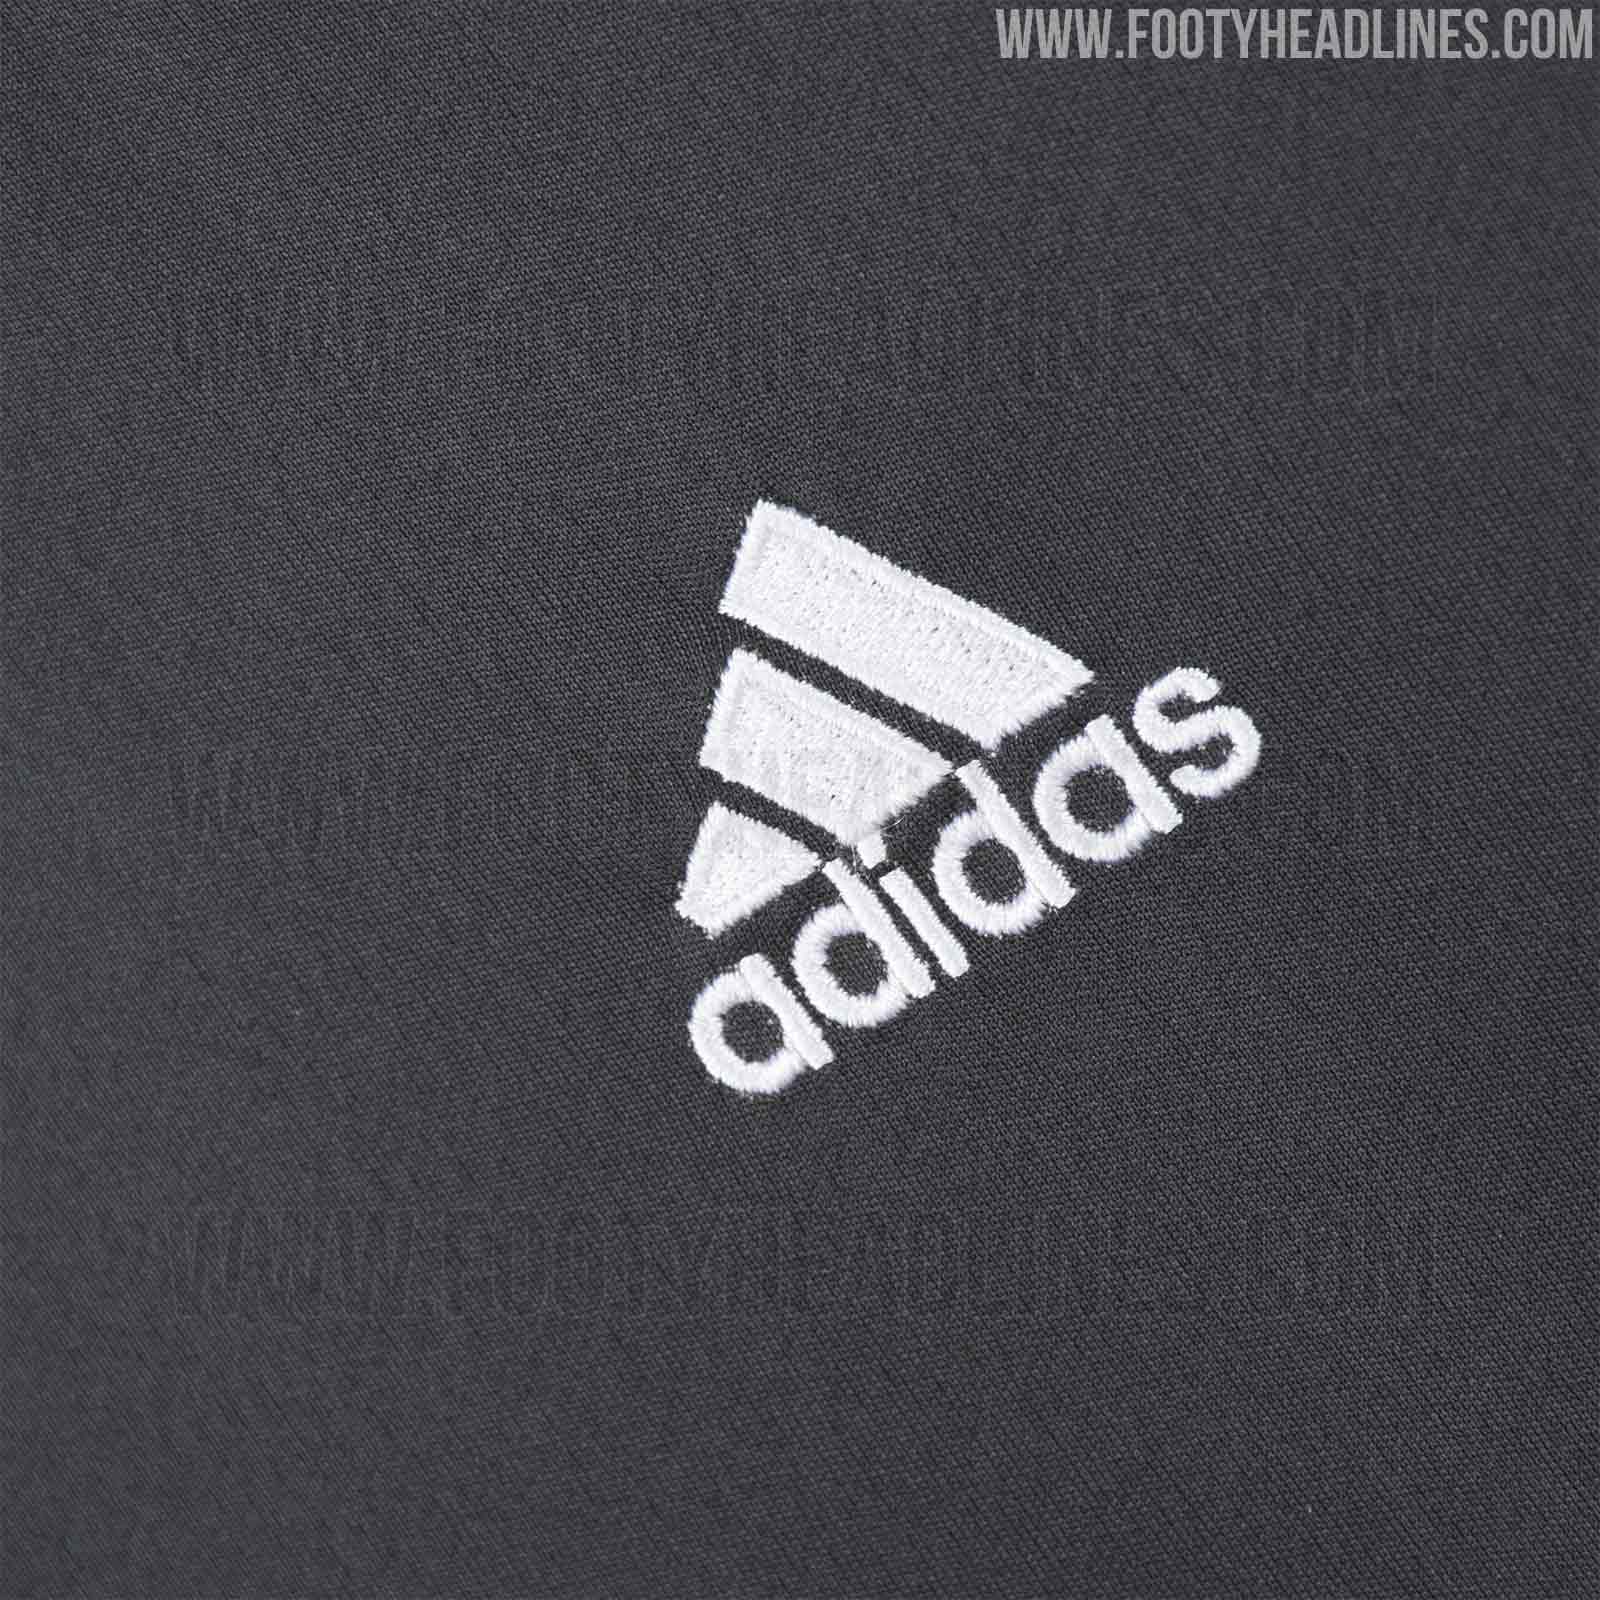 Adidas Ponte Preta 17-18 Home & Away Kits Revealed - Footy Headlines